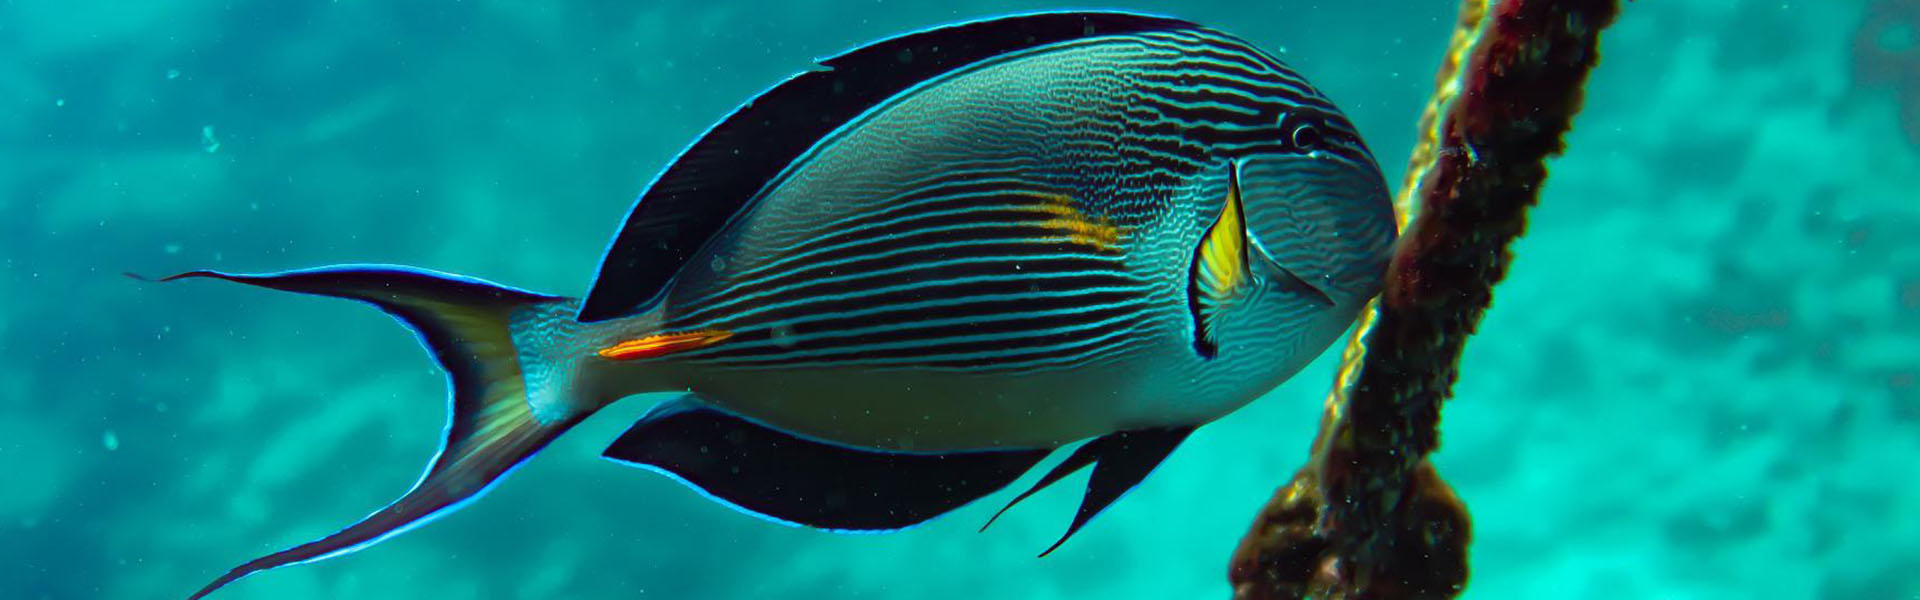 The Sohal Surgeonfish